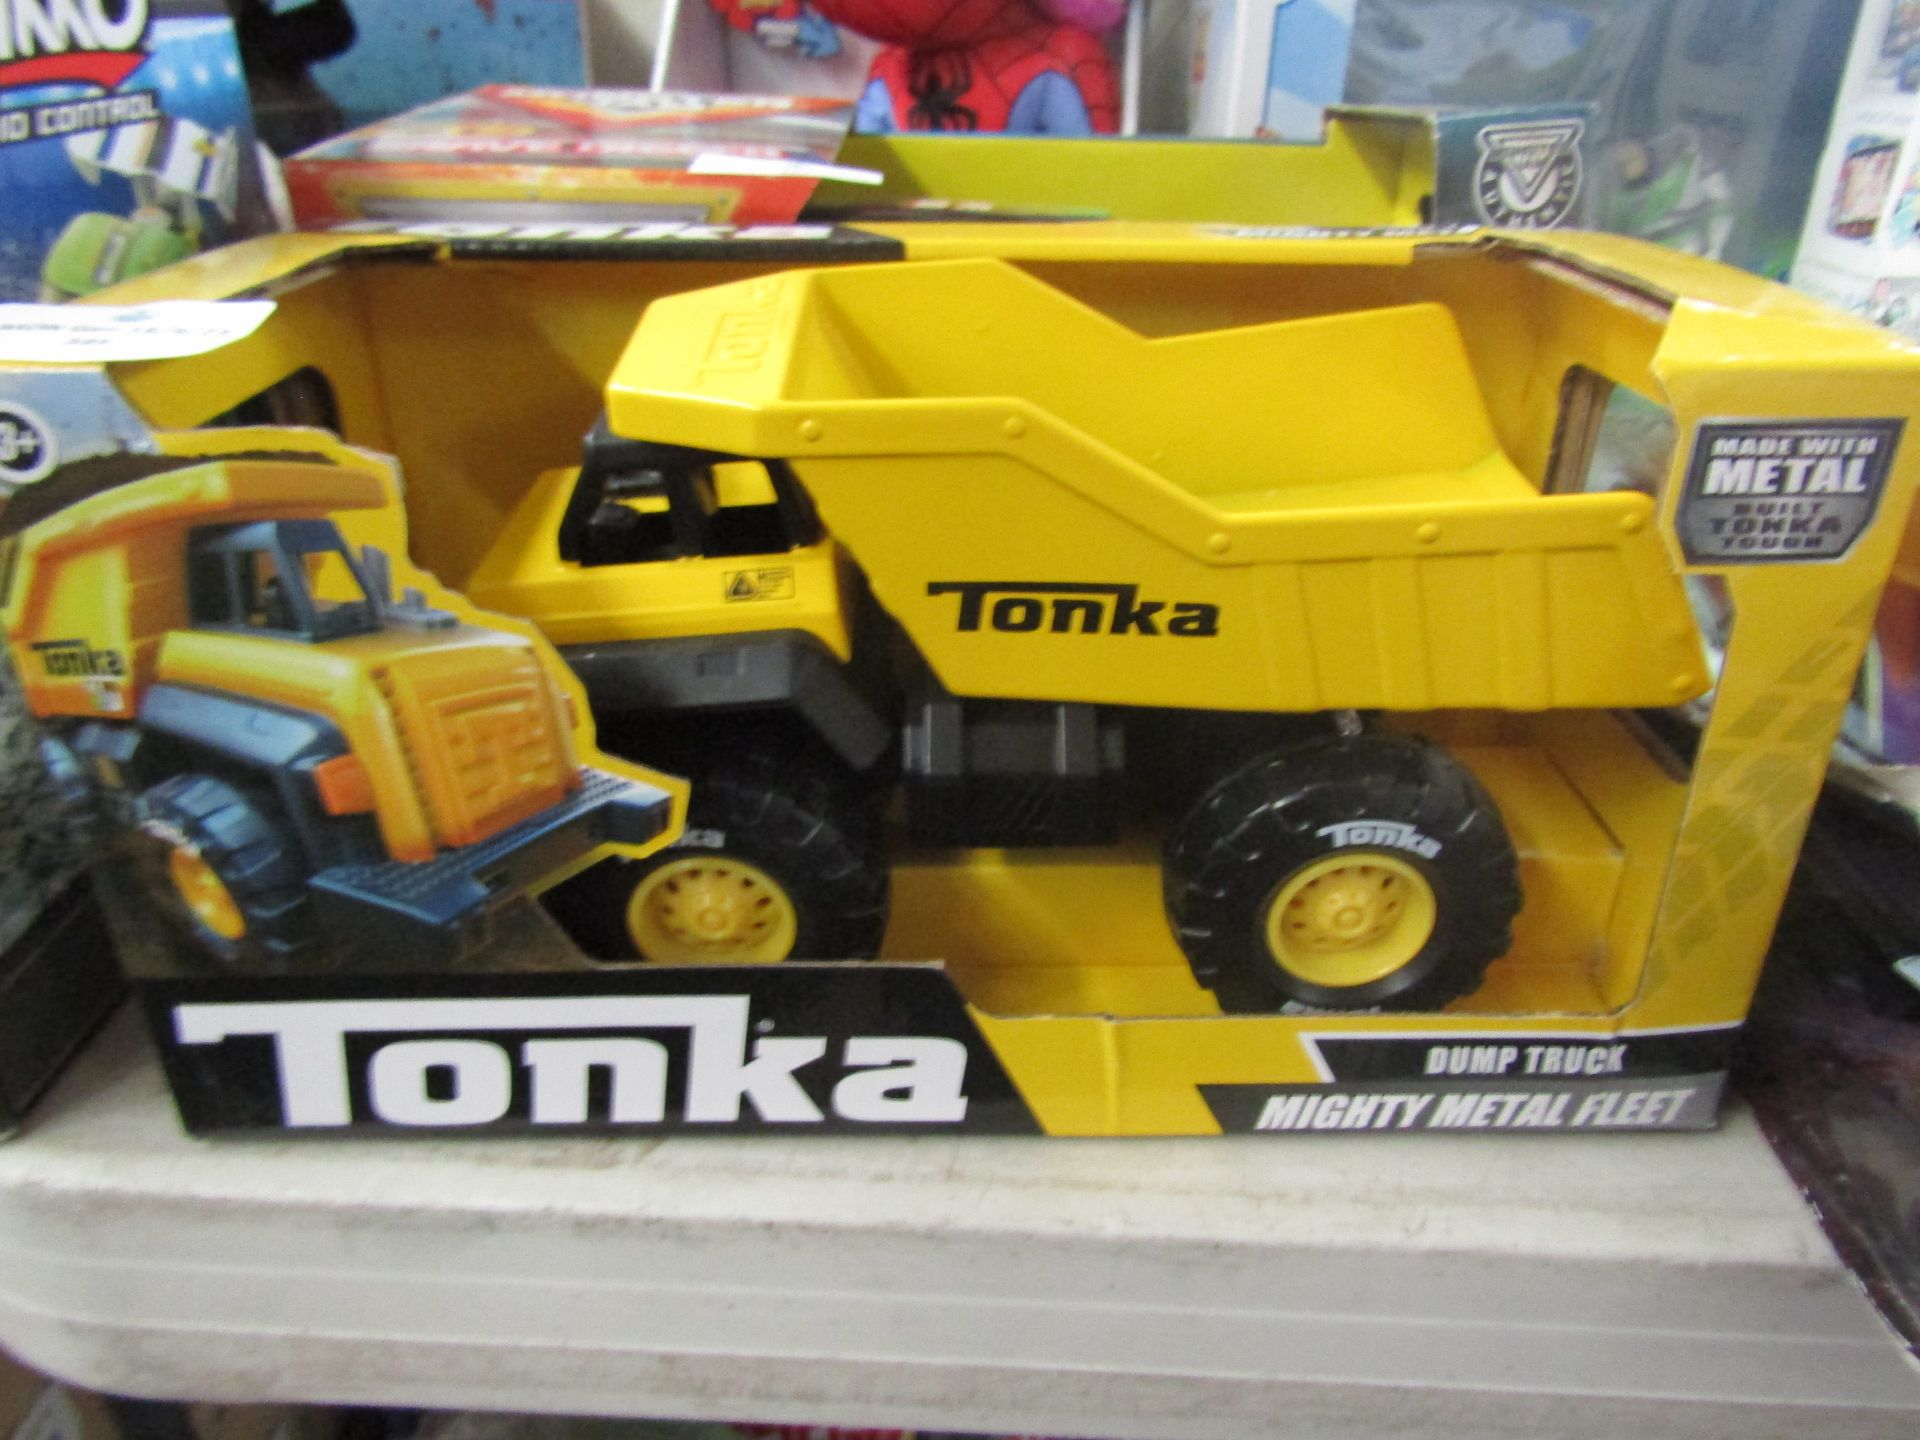 Tonka - Mighty Metal Fleet Dump Truck - Good Condition & Boxed.